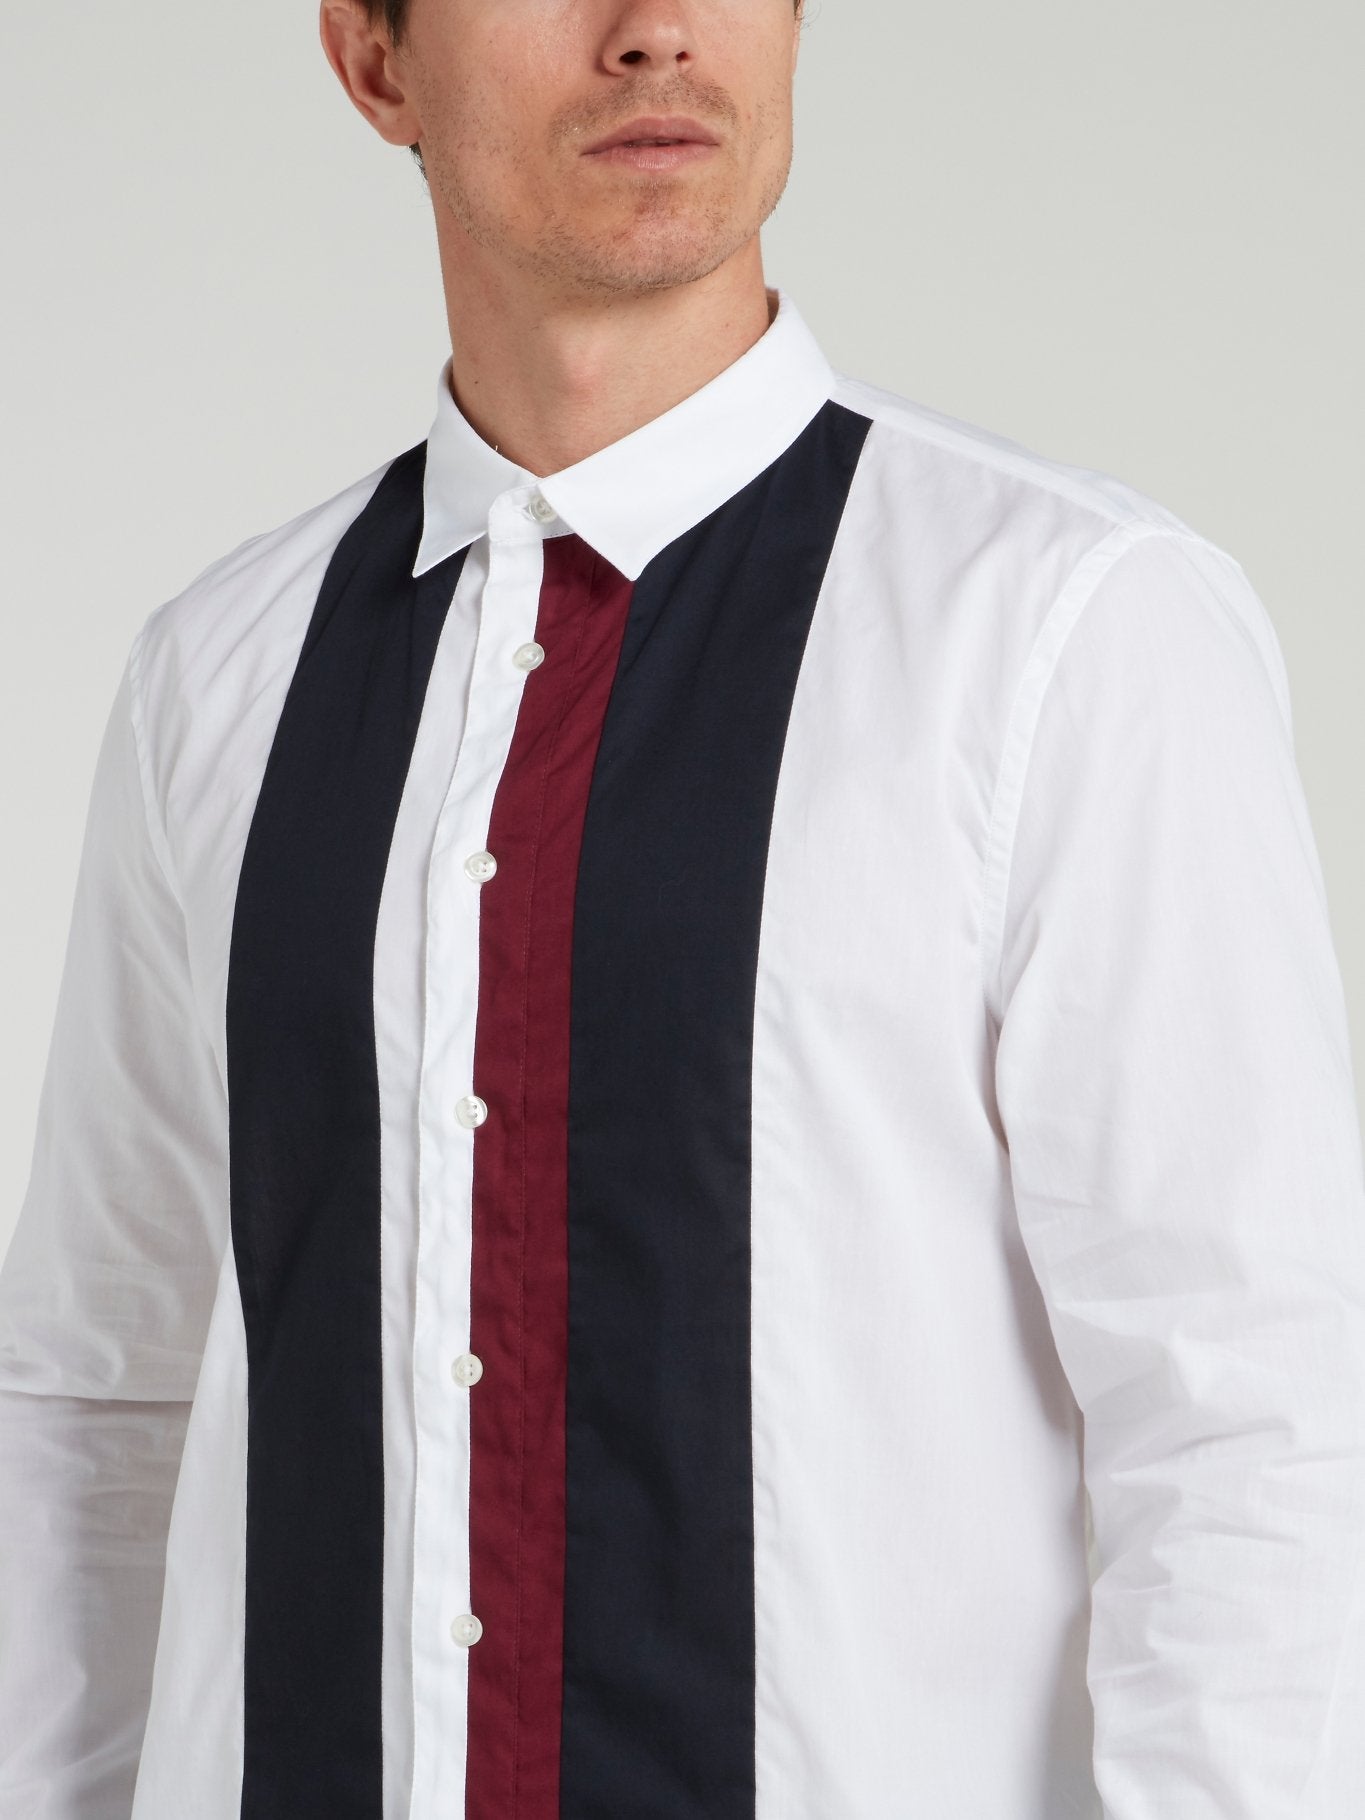 White Stripe Panel Button Up Shirt